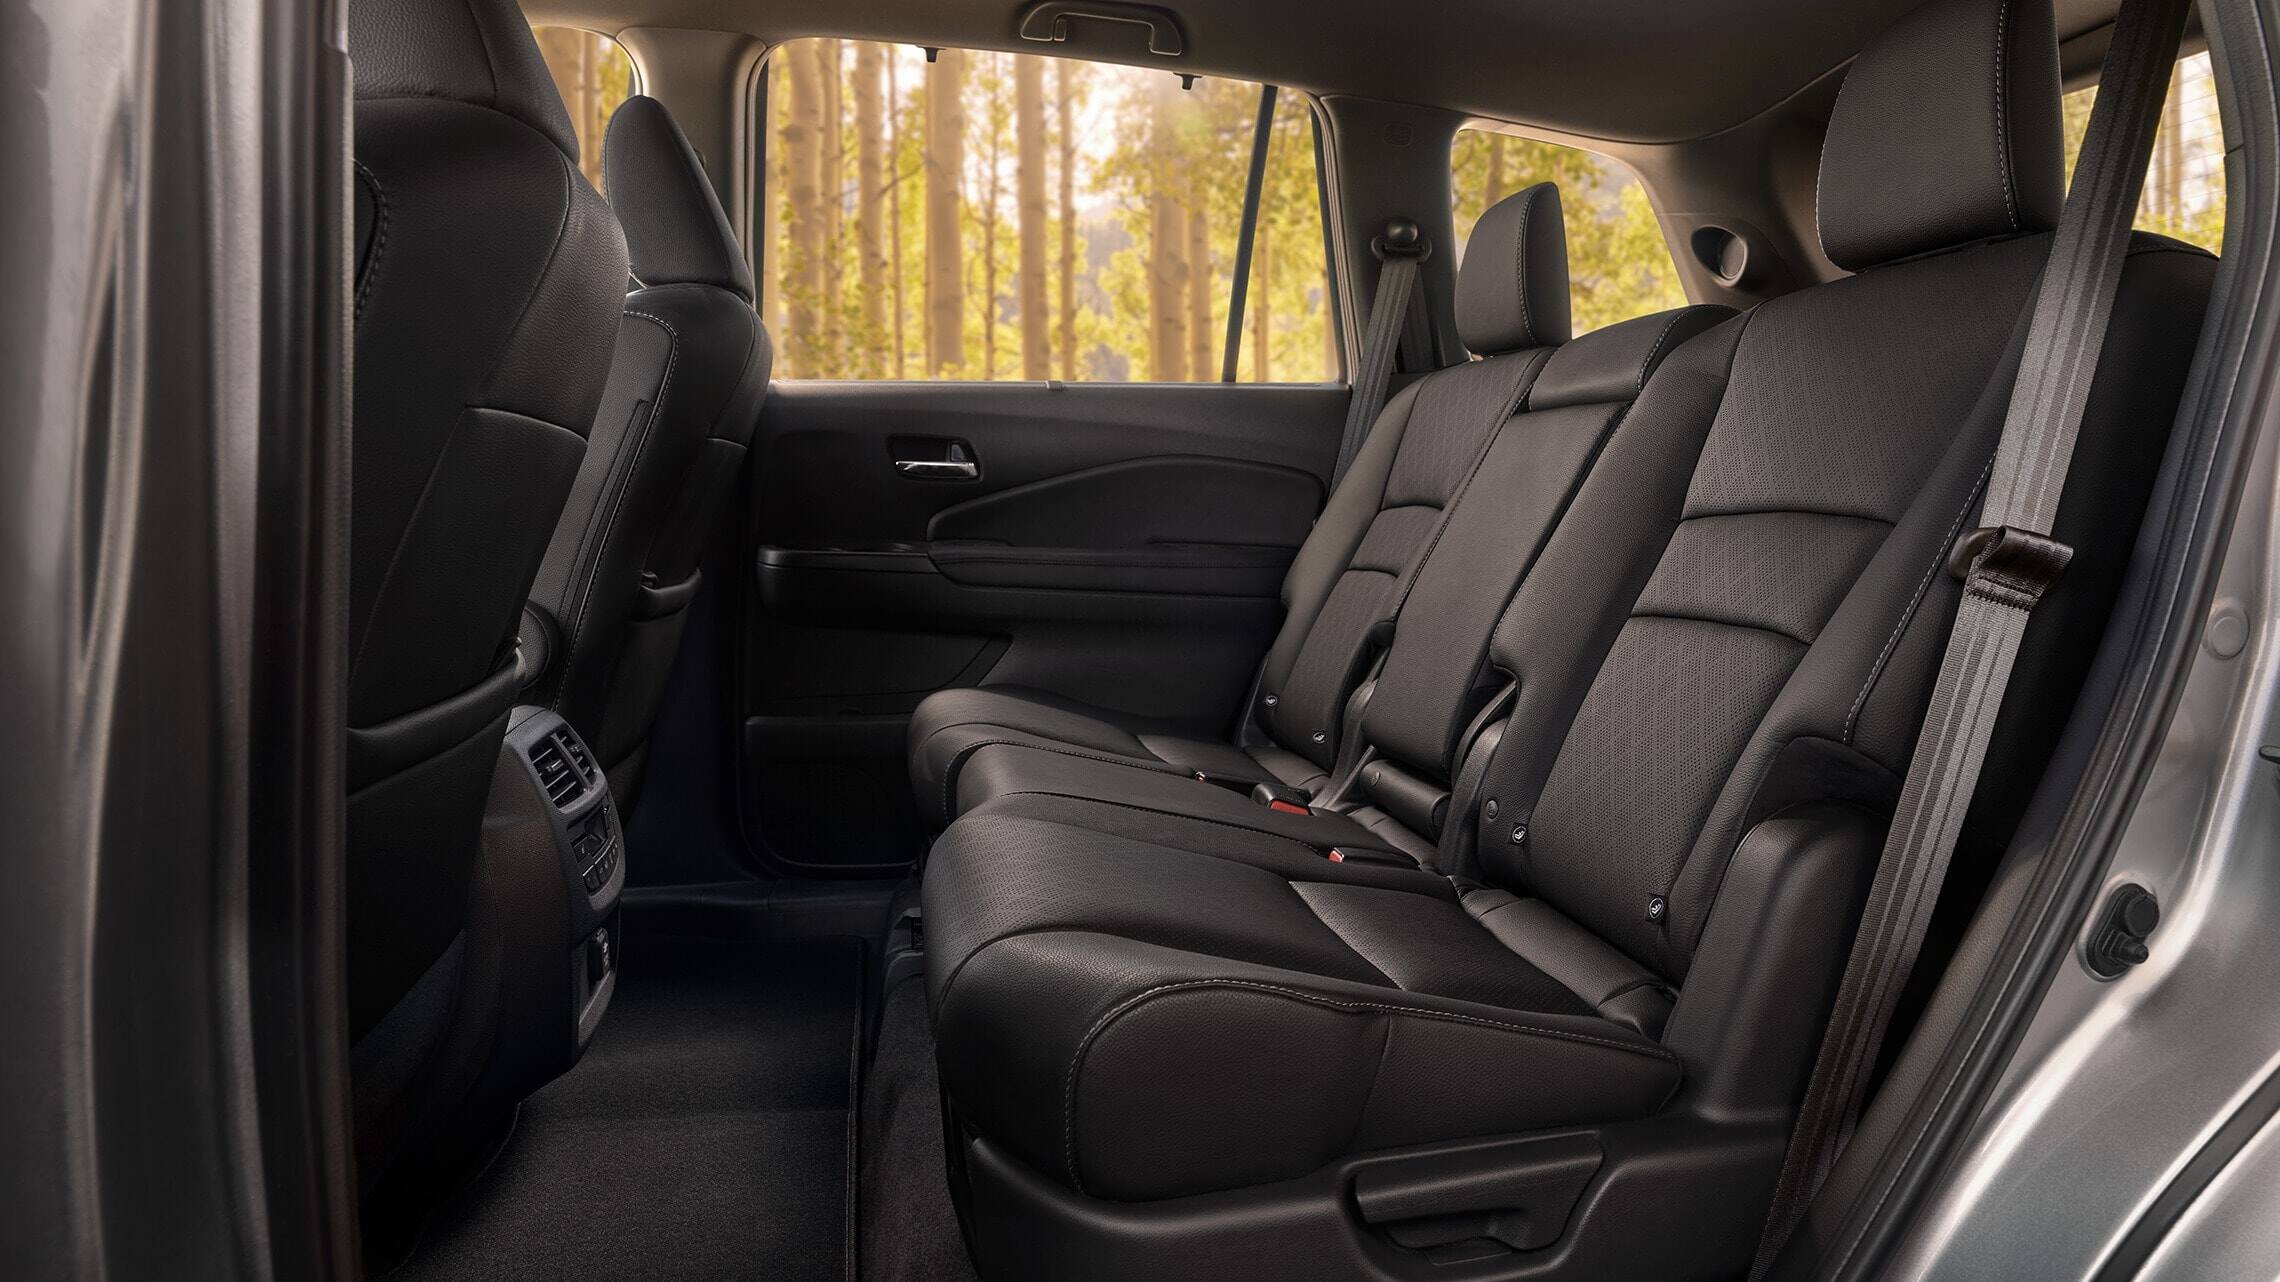 2019 Honda Passport Elite rear interior in Black Leather, displaying spacious 2nd-row seating.